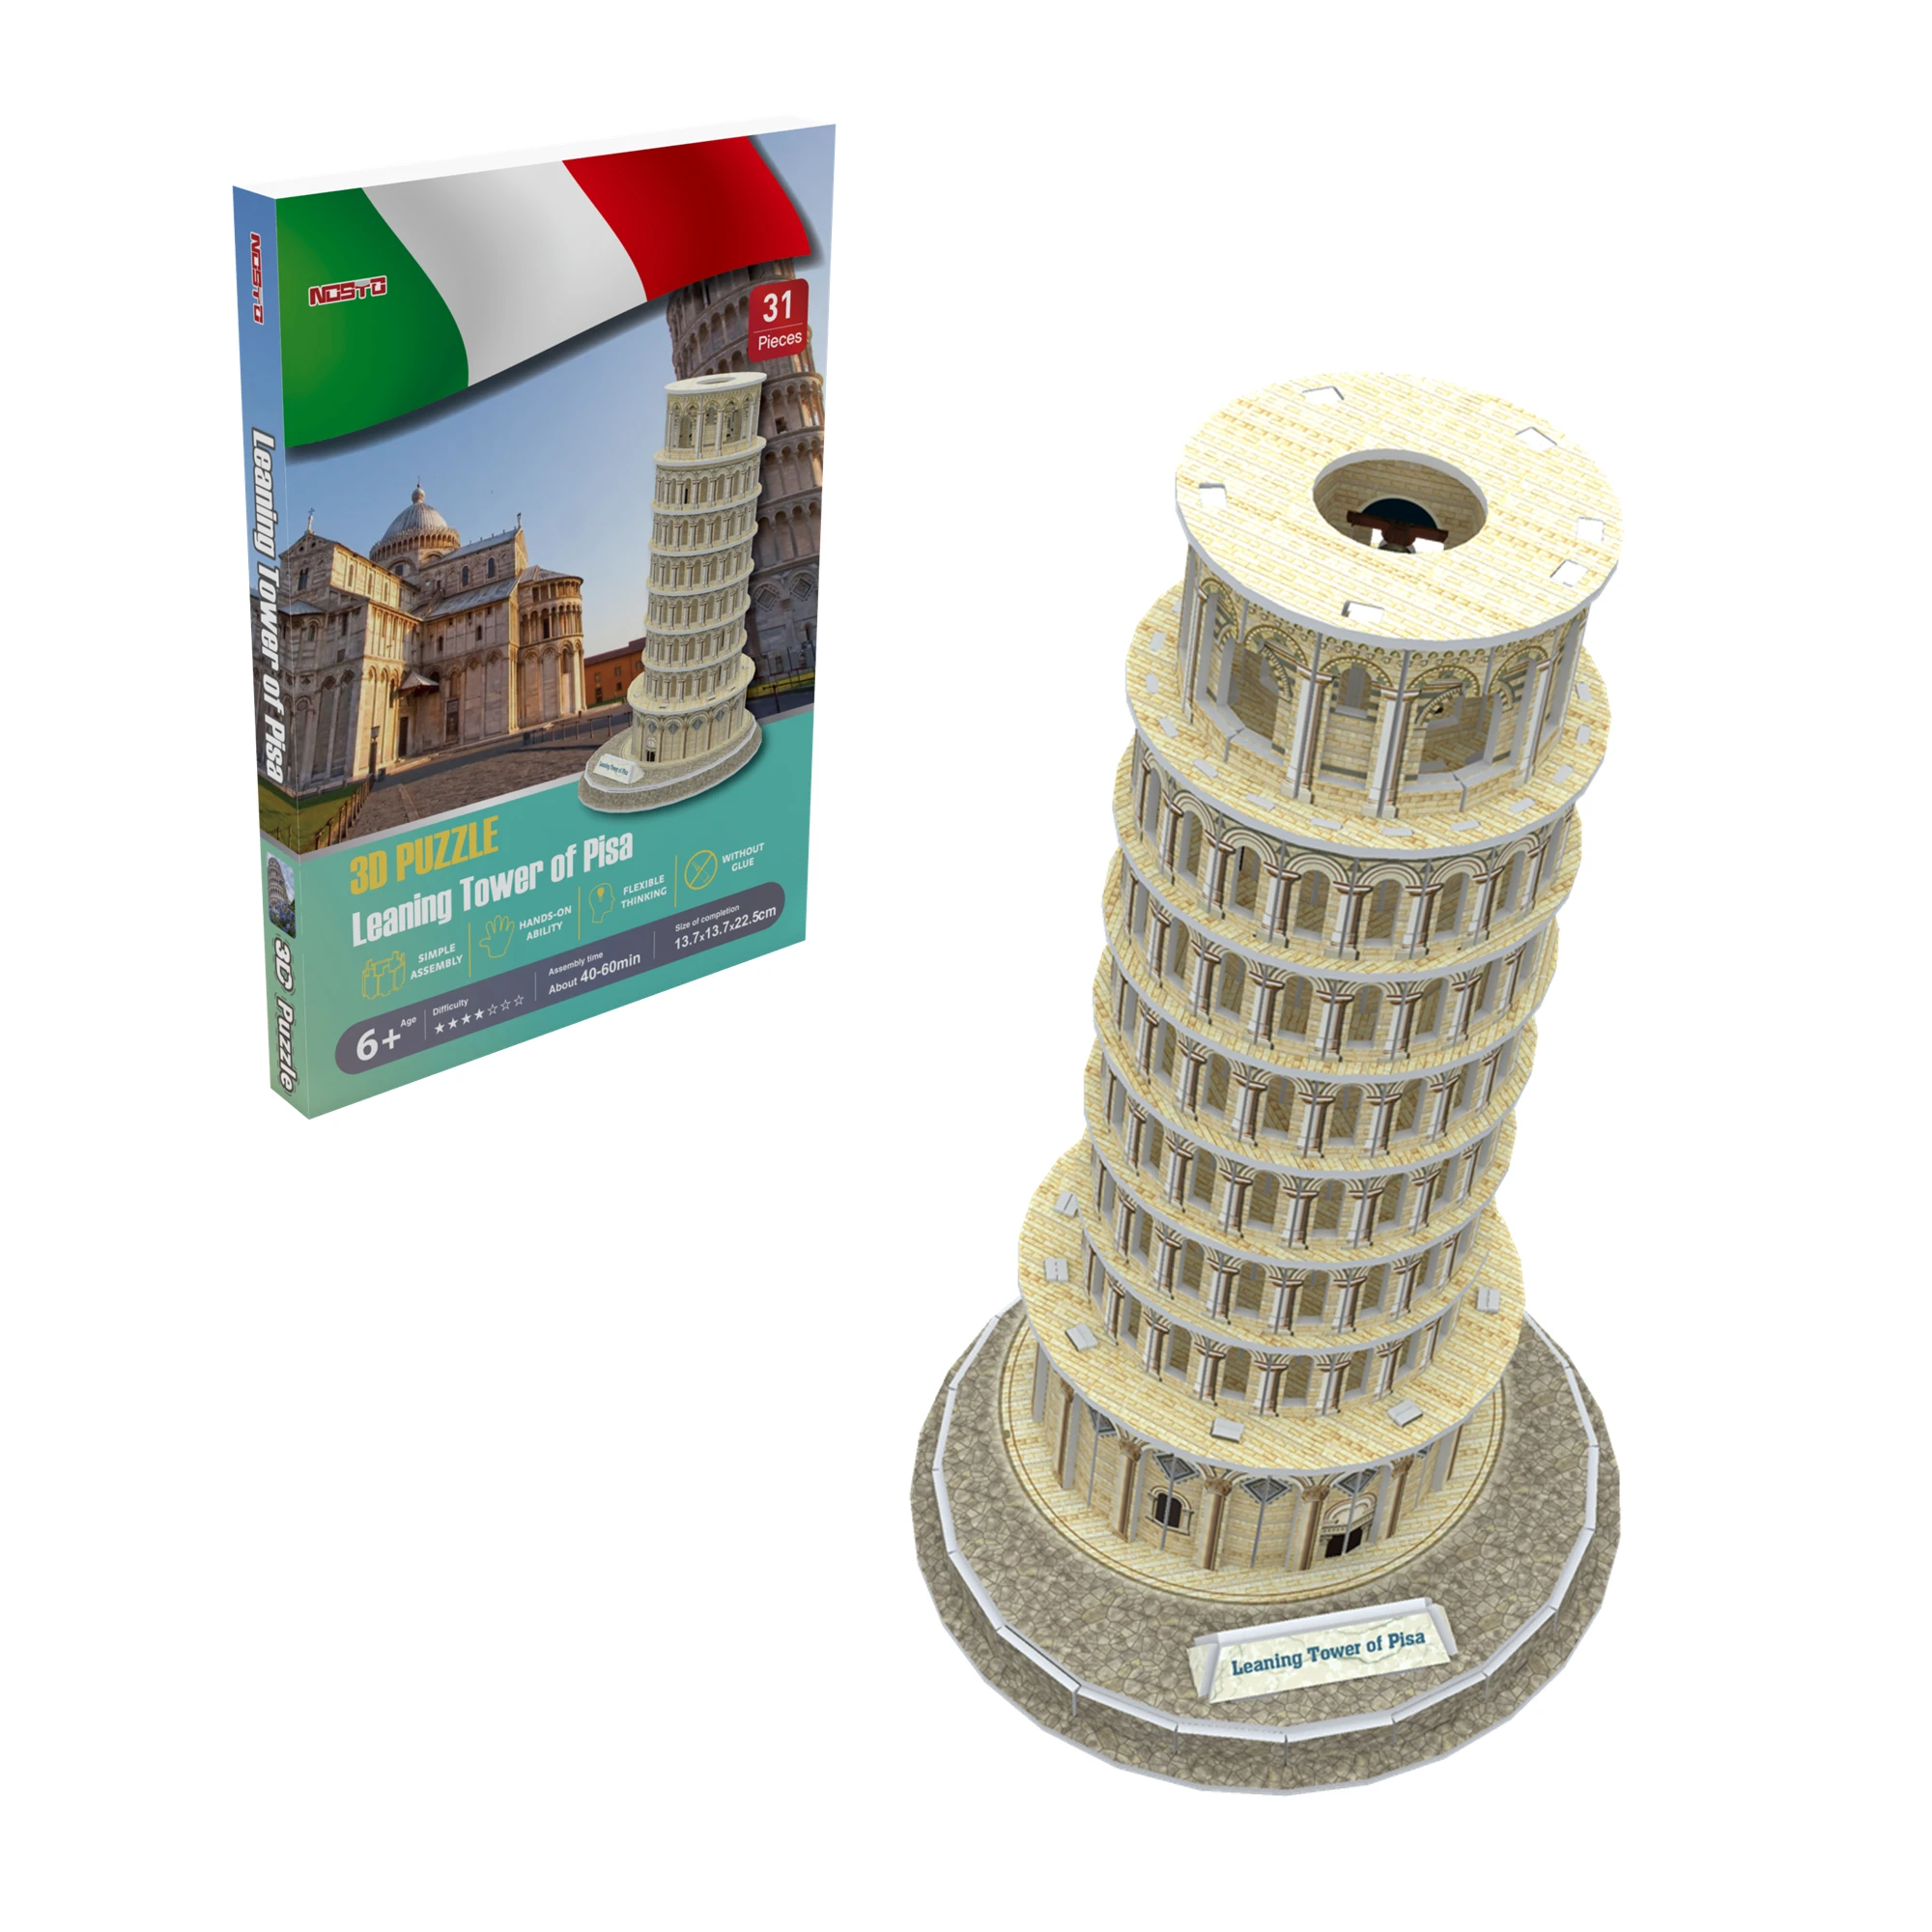 3D PUZZLE Tower London Paris Windmill Pisa Car Gift Education ARCHITECTURE UK 